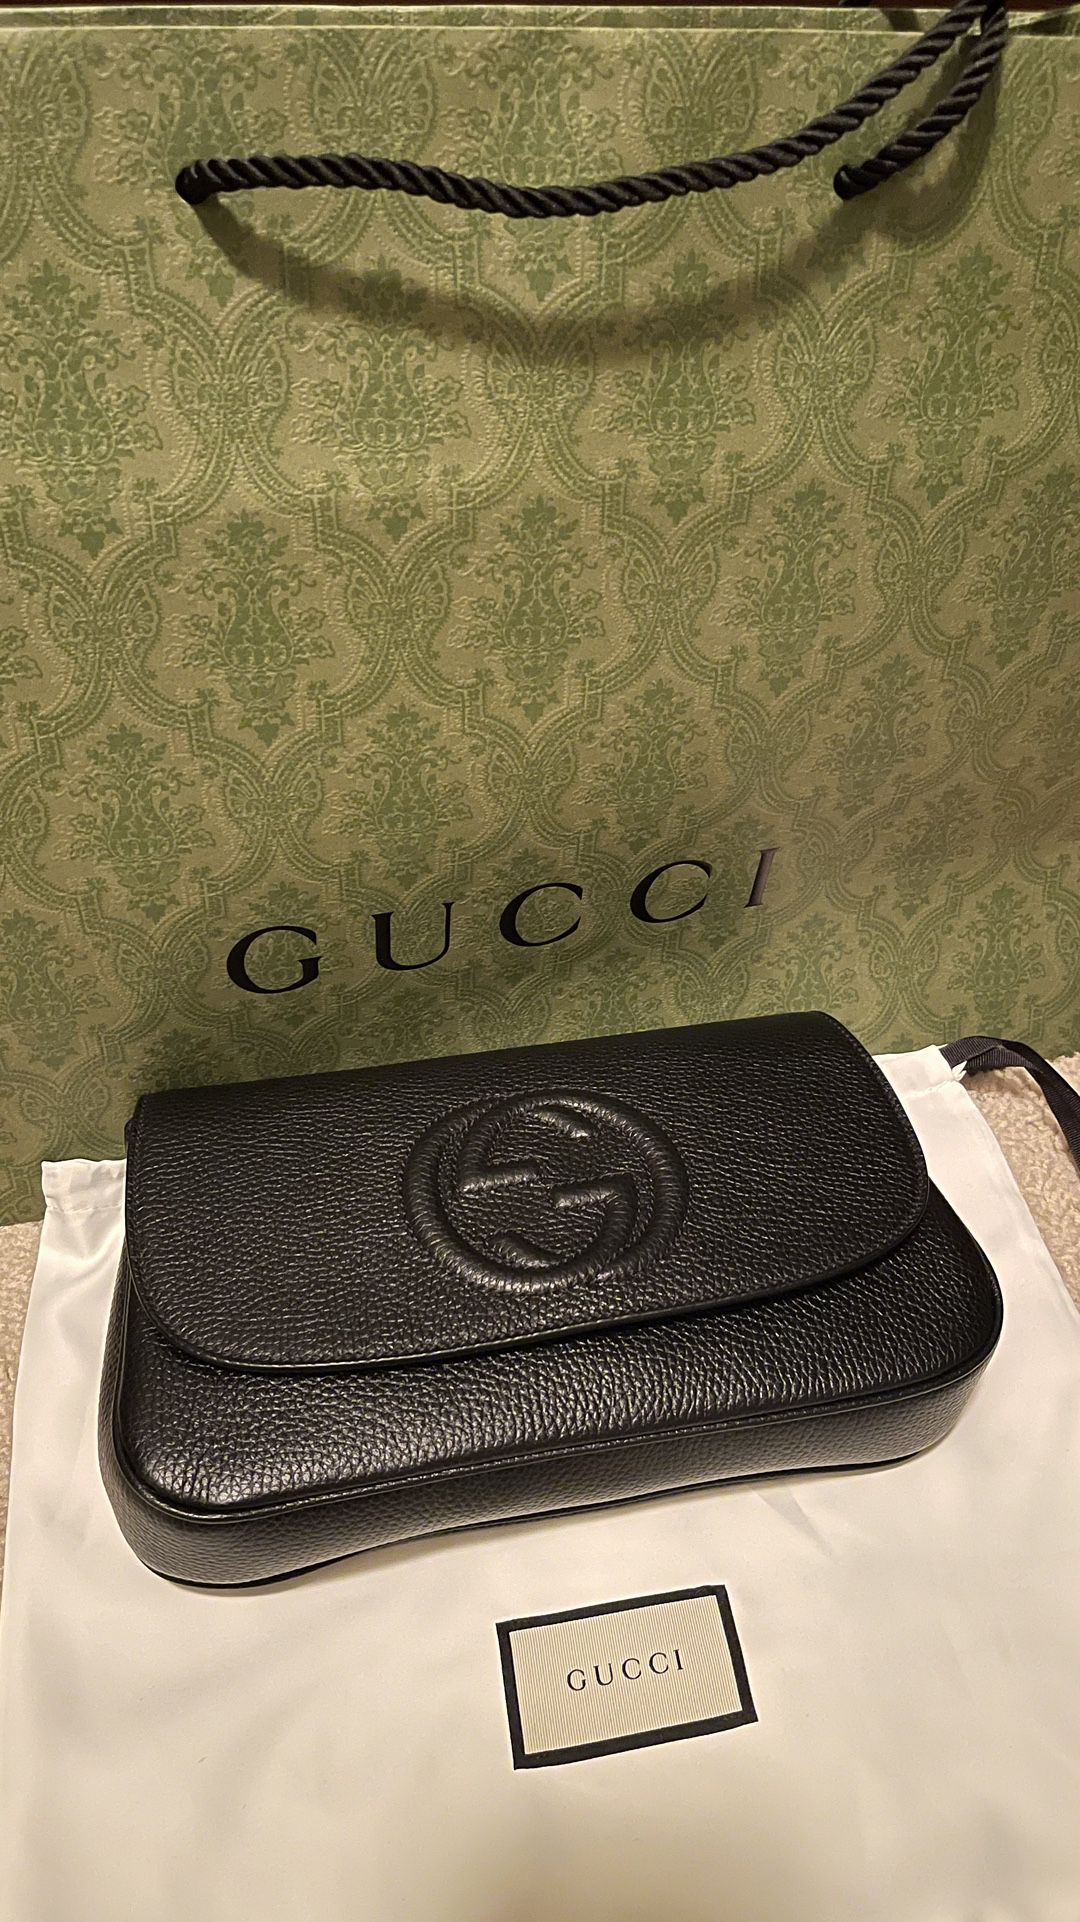 Gucci Bag Brand New